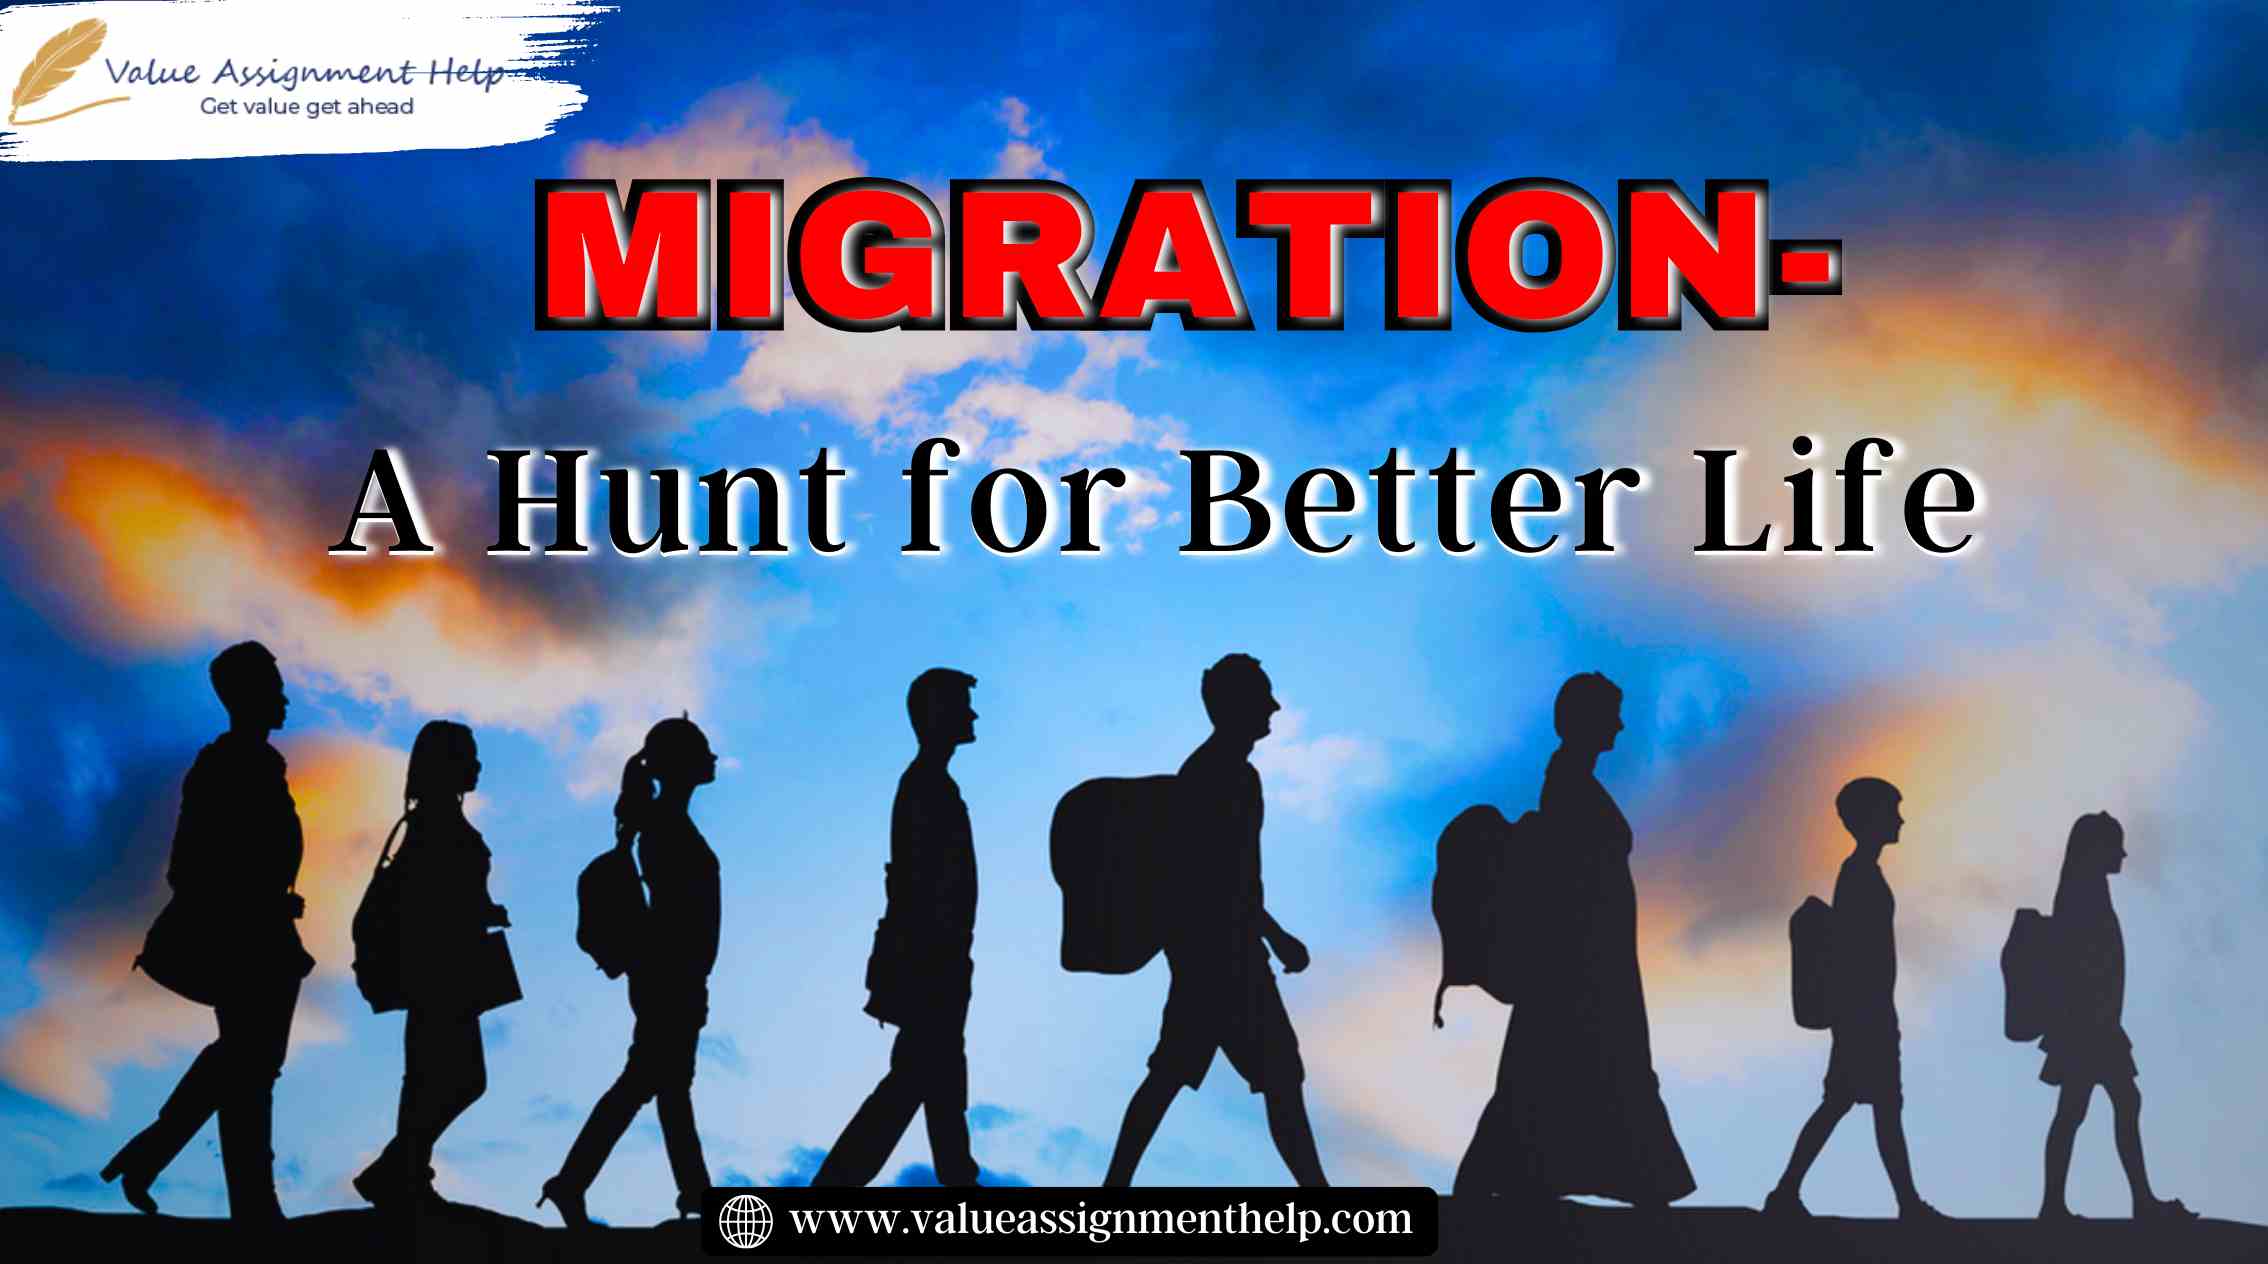  Migration-A Hunt for Better Life